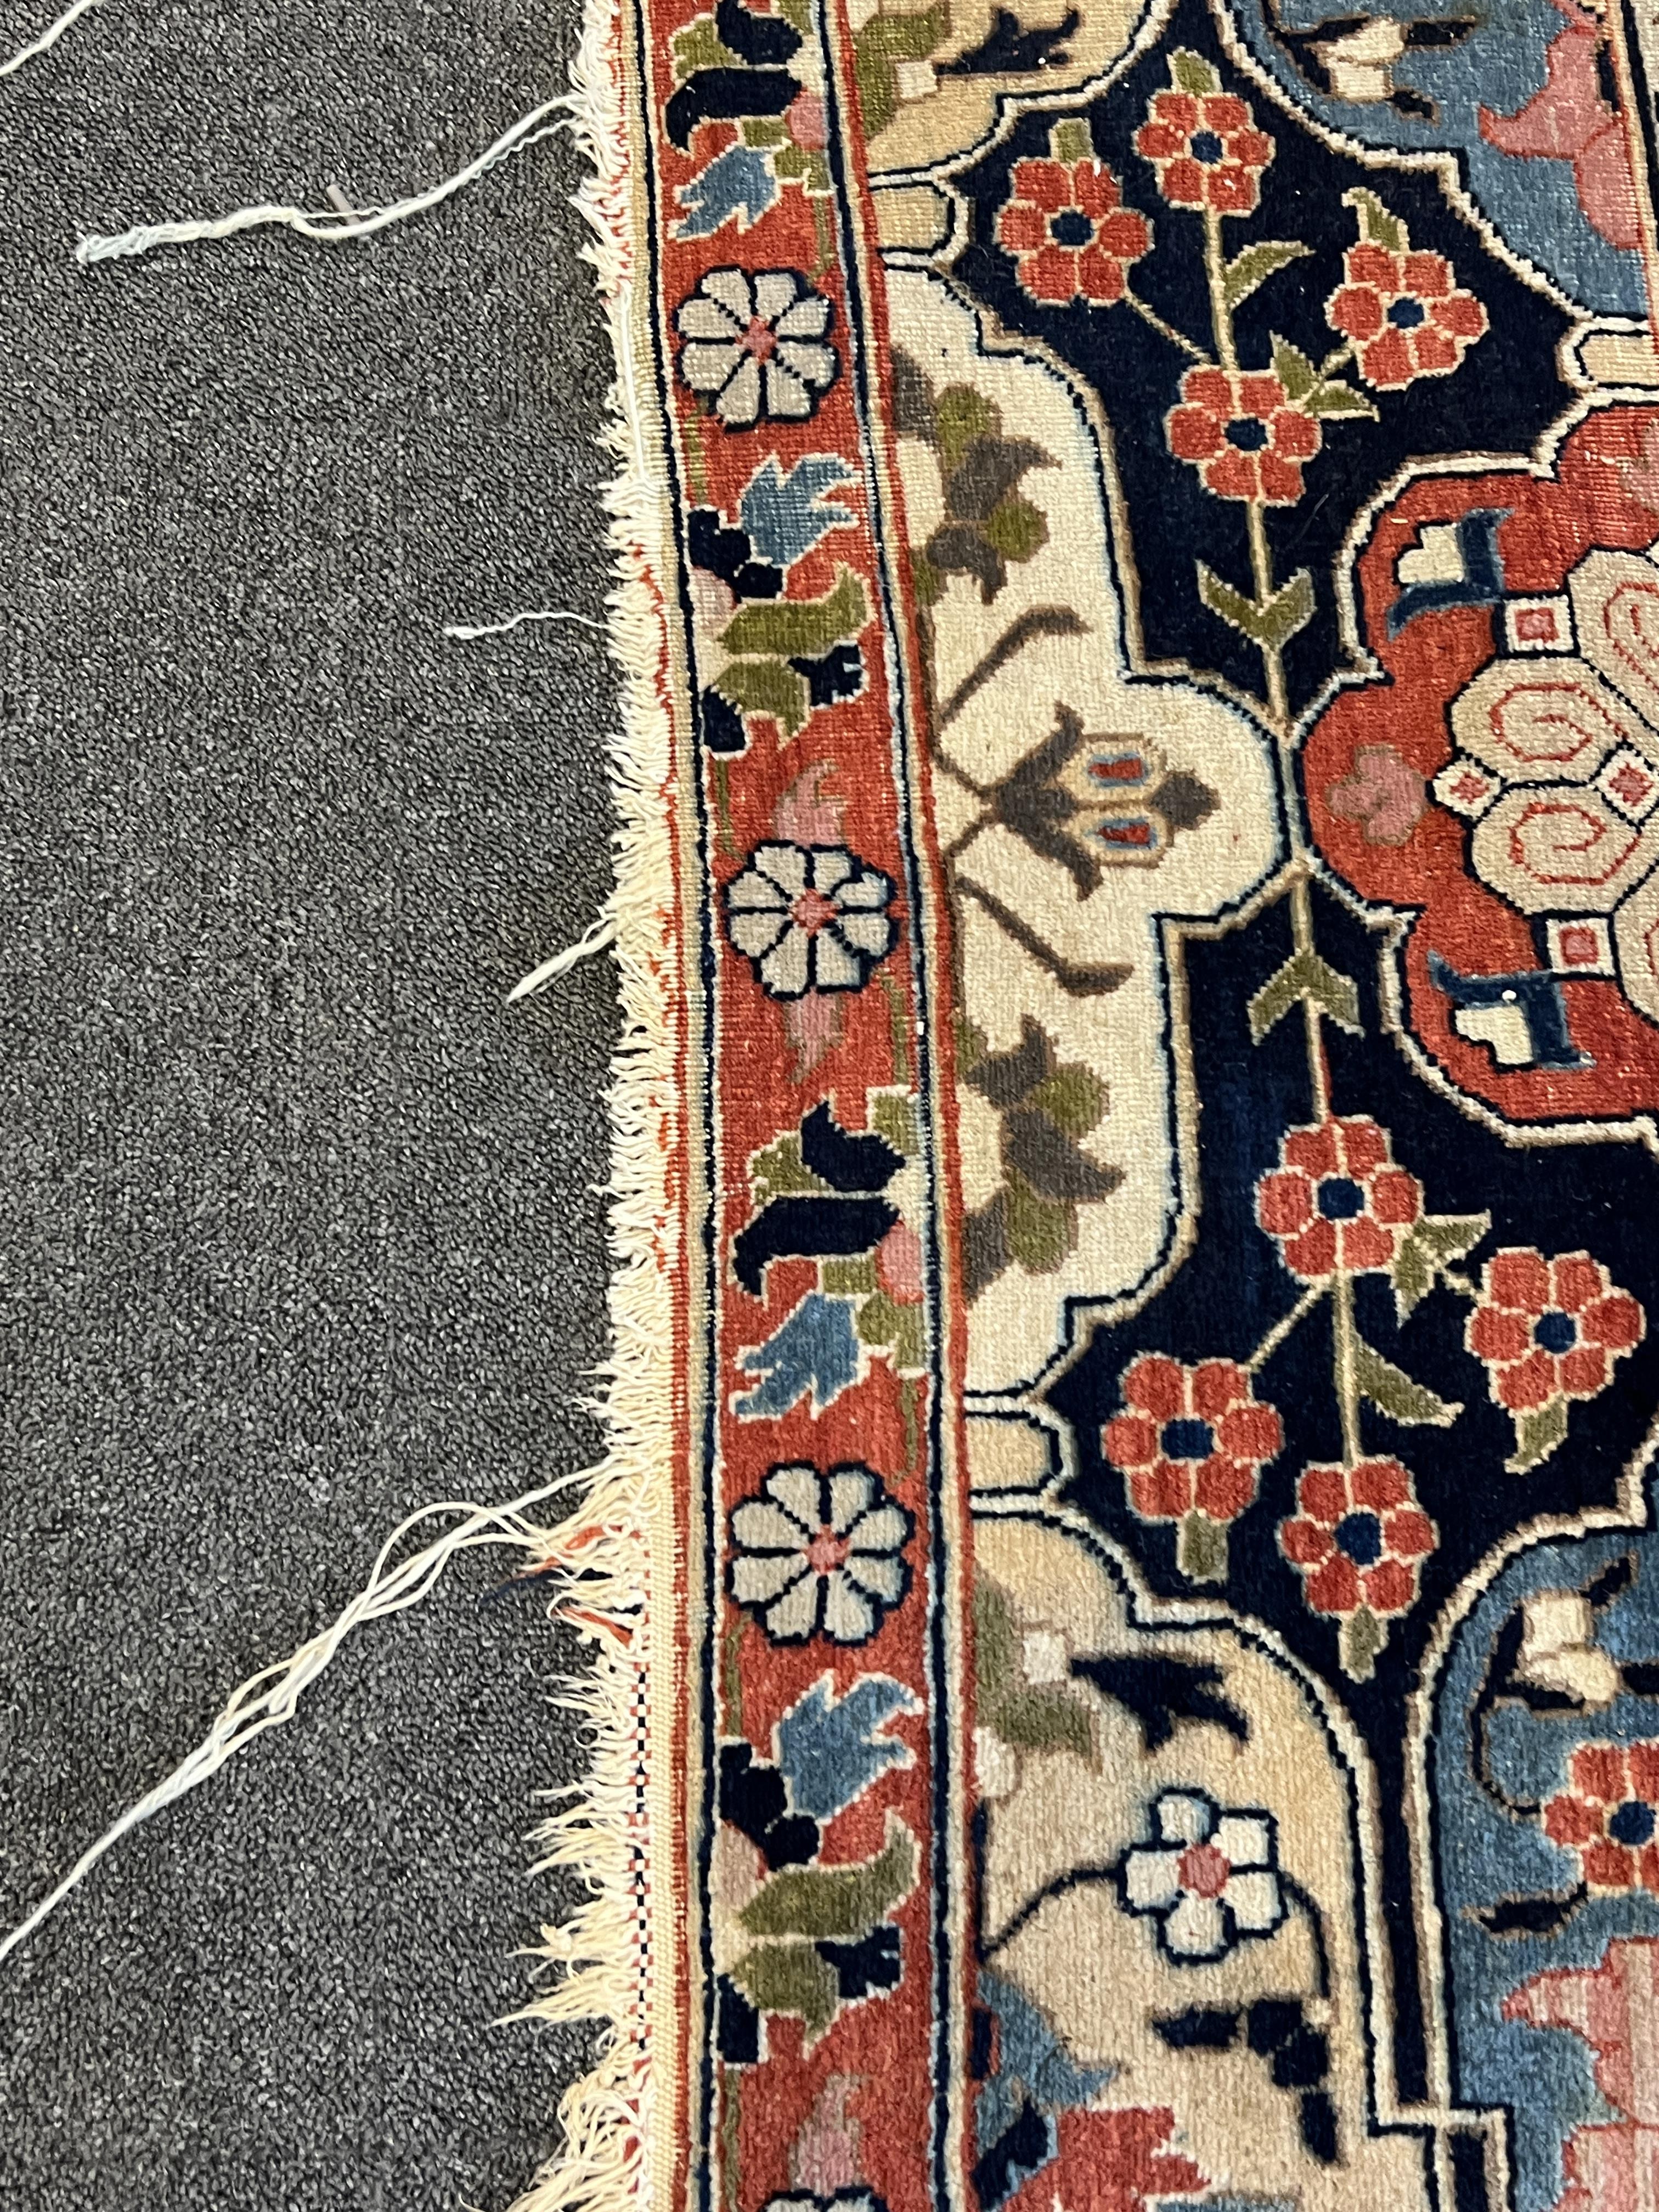 An early 20th century Benlian Tabriz carpet, signed Mahmud, 320 x 225cm